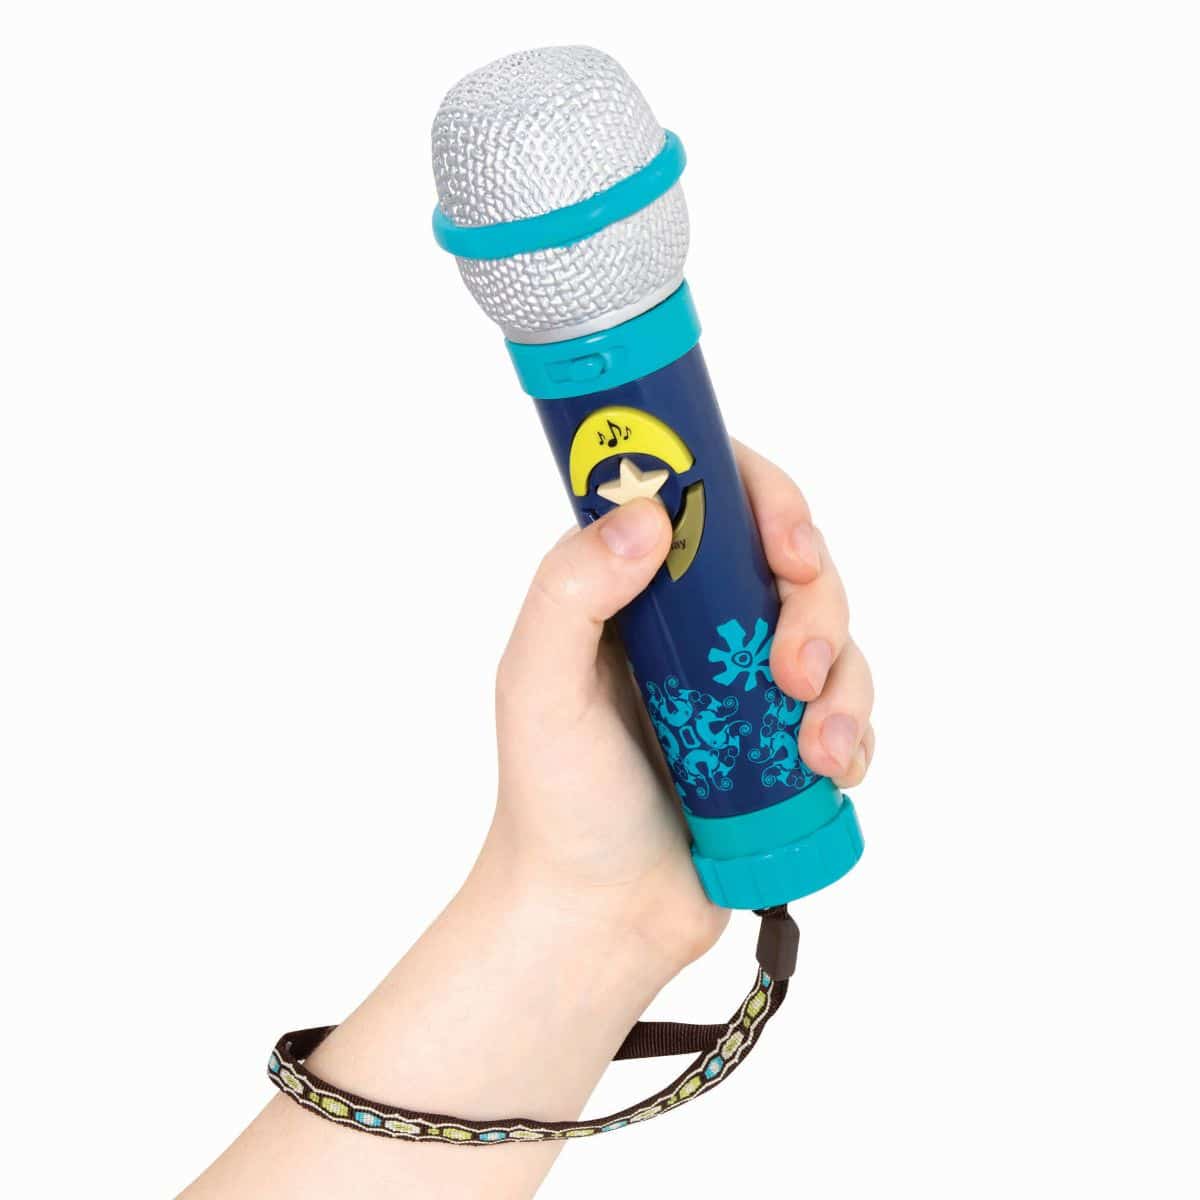 Toy Karaoke Microphone